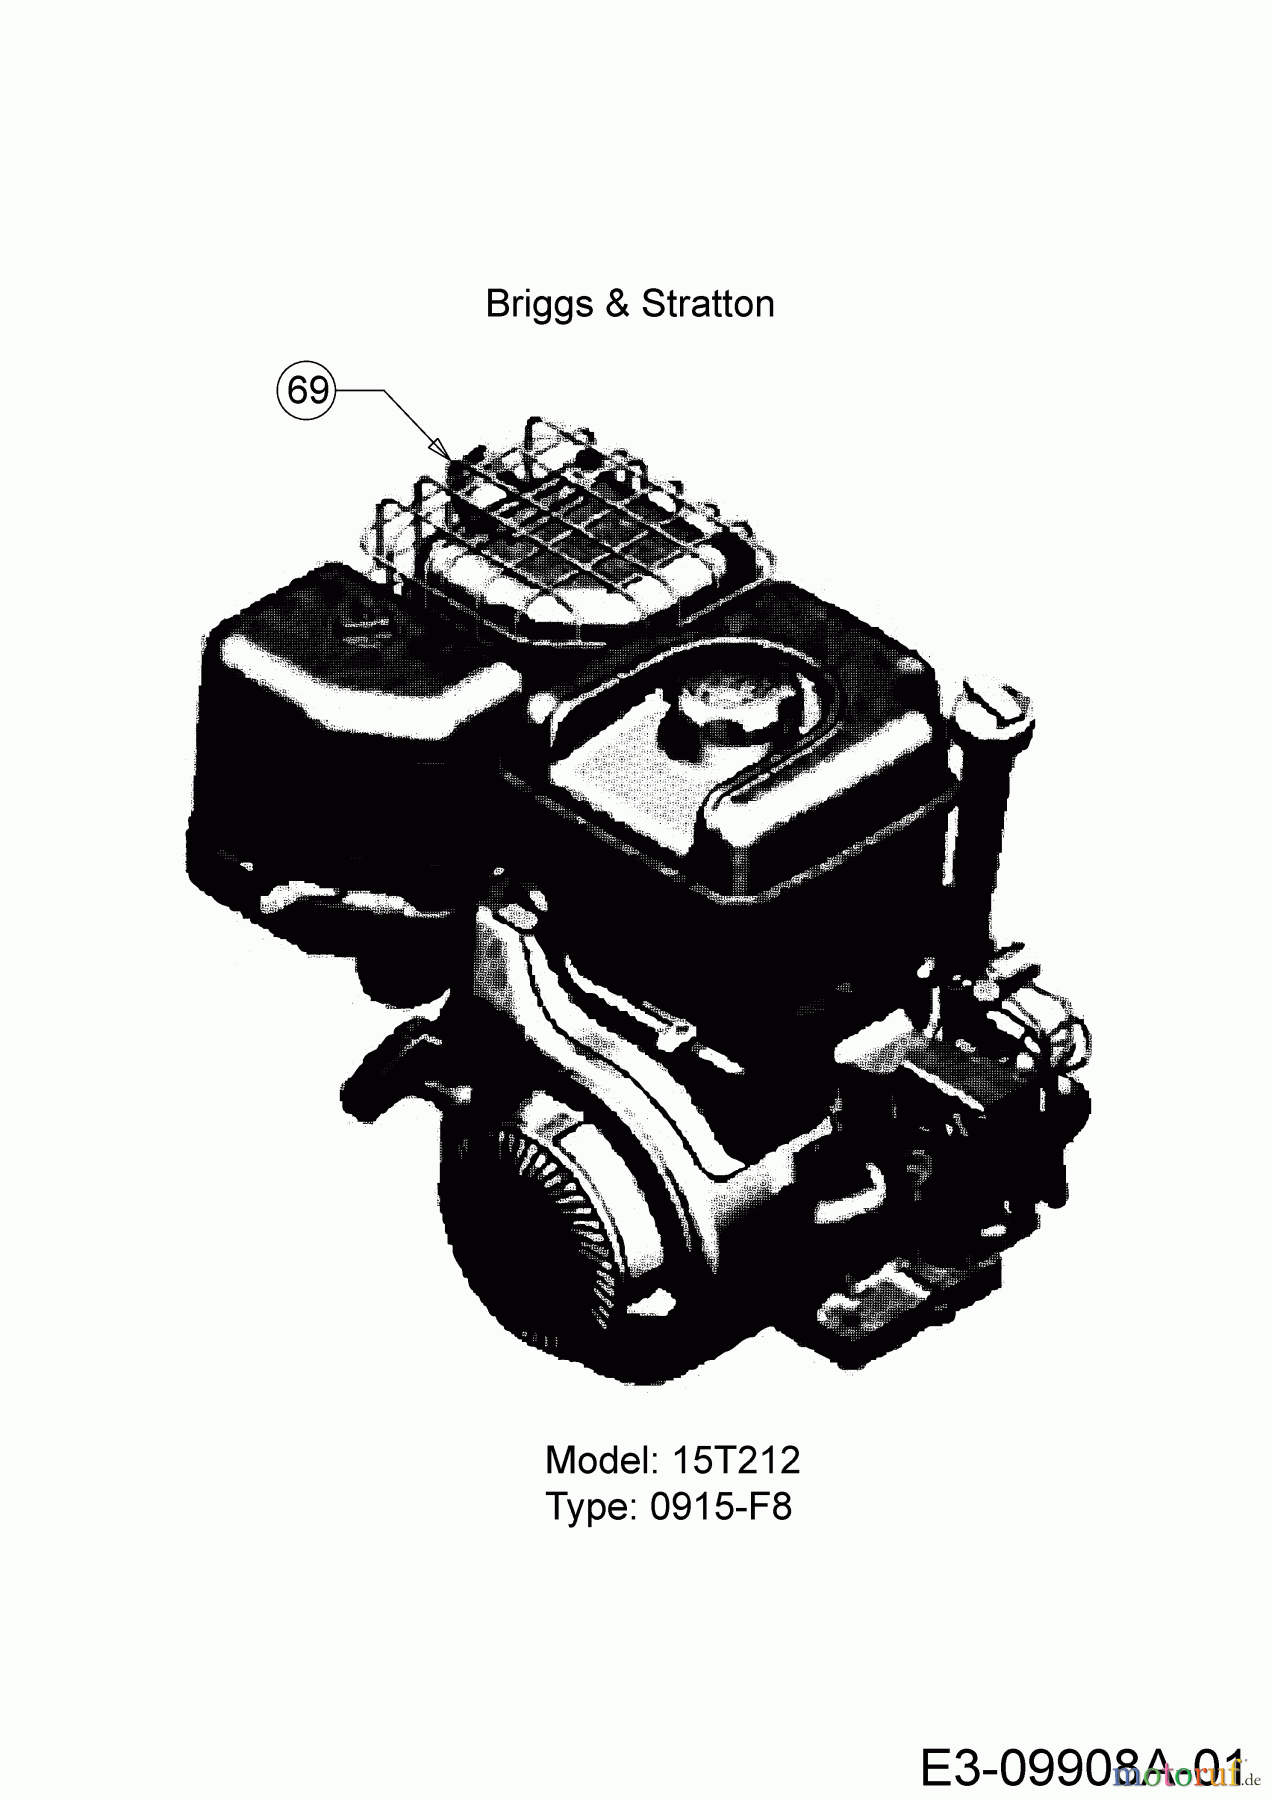  Troy-Bilt Chipper CS 4325 24B-424M766  (2017) Engine Briggs & Stratton